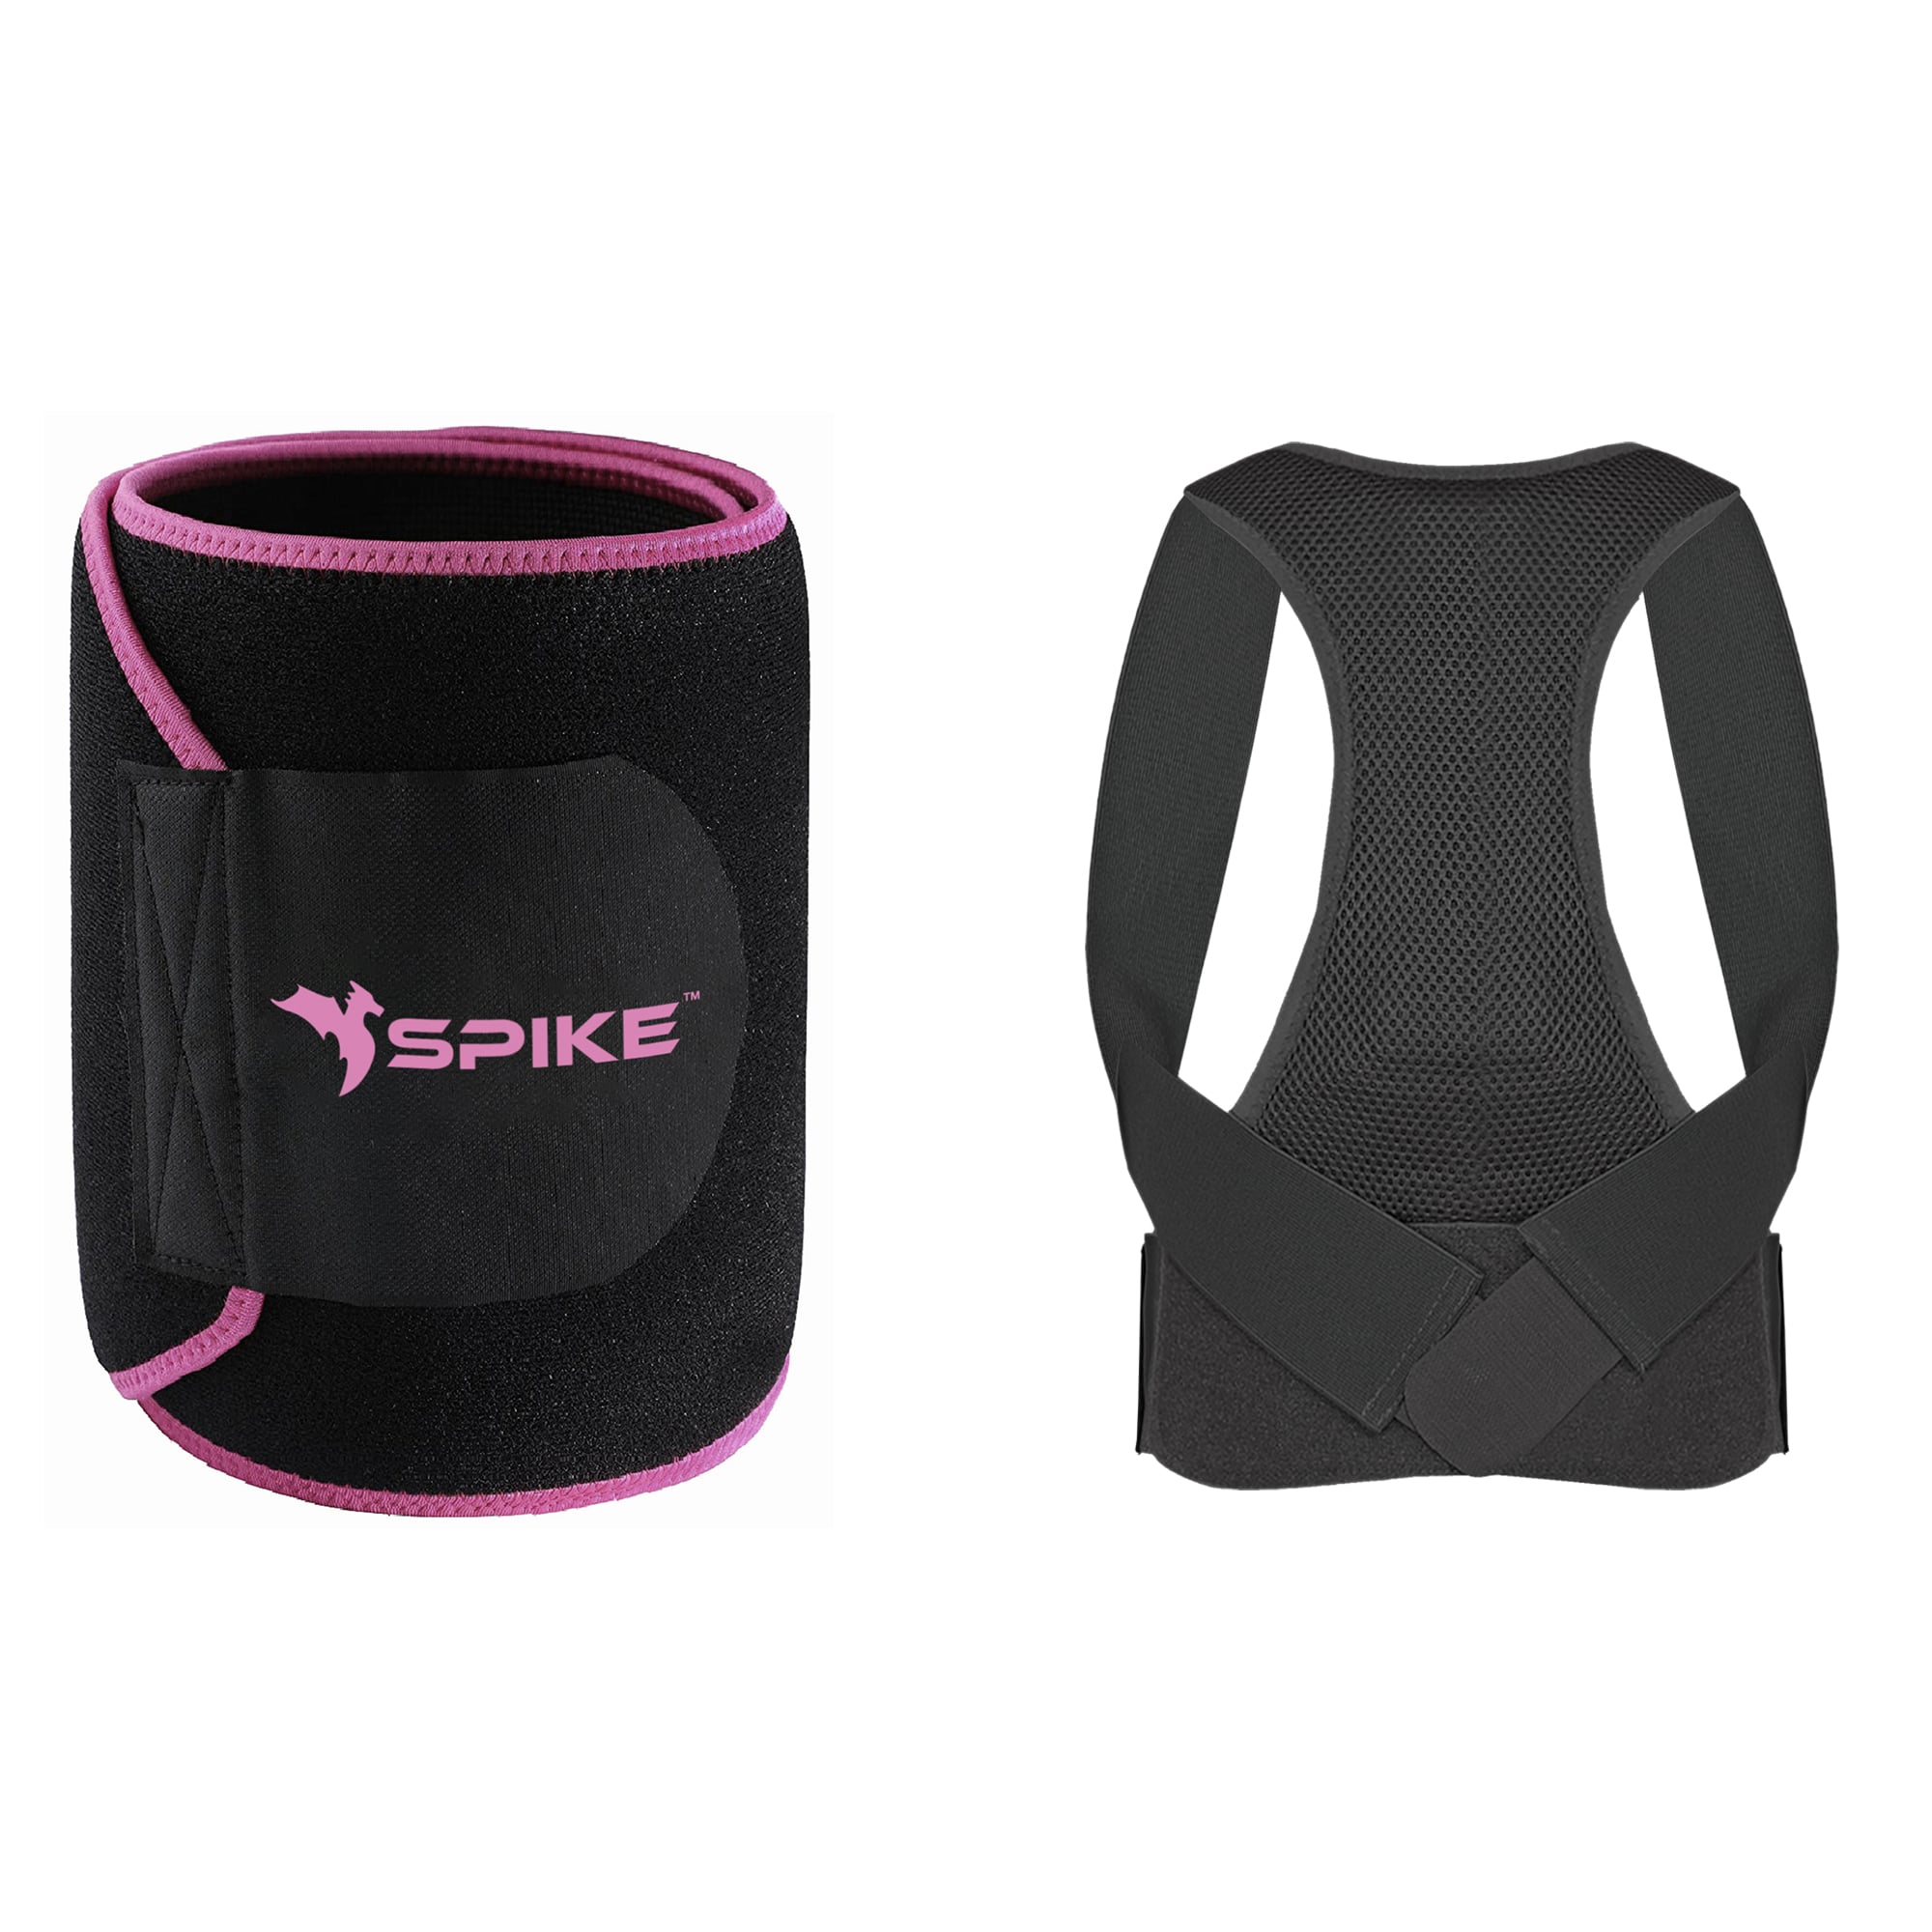 Spike Slim Belt (Pink) + Spike Posture Corrector